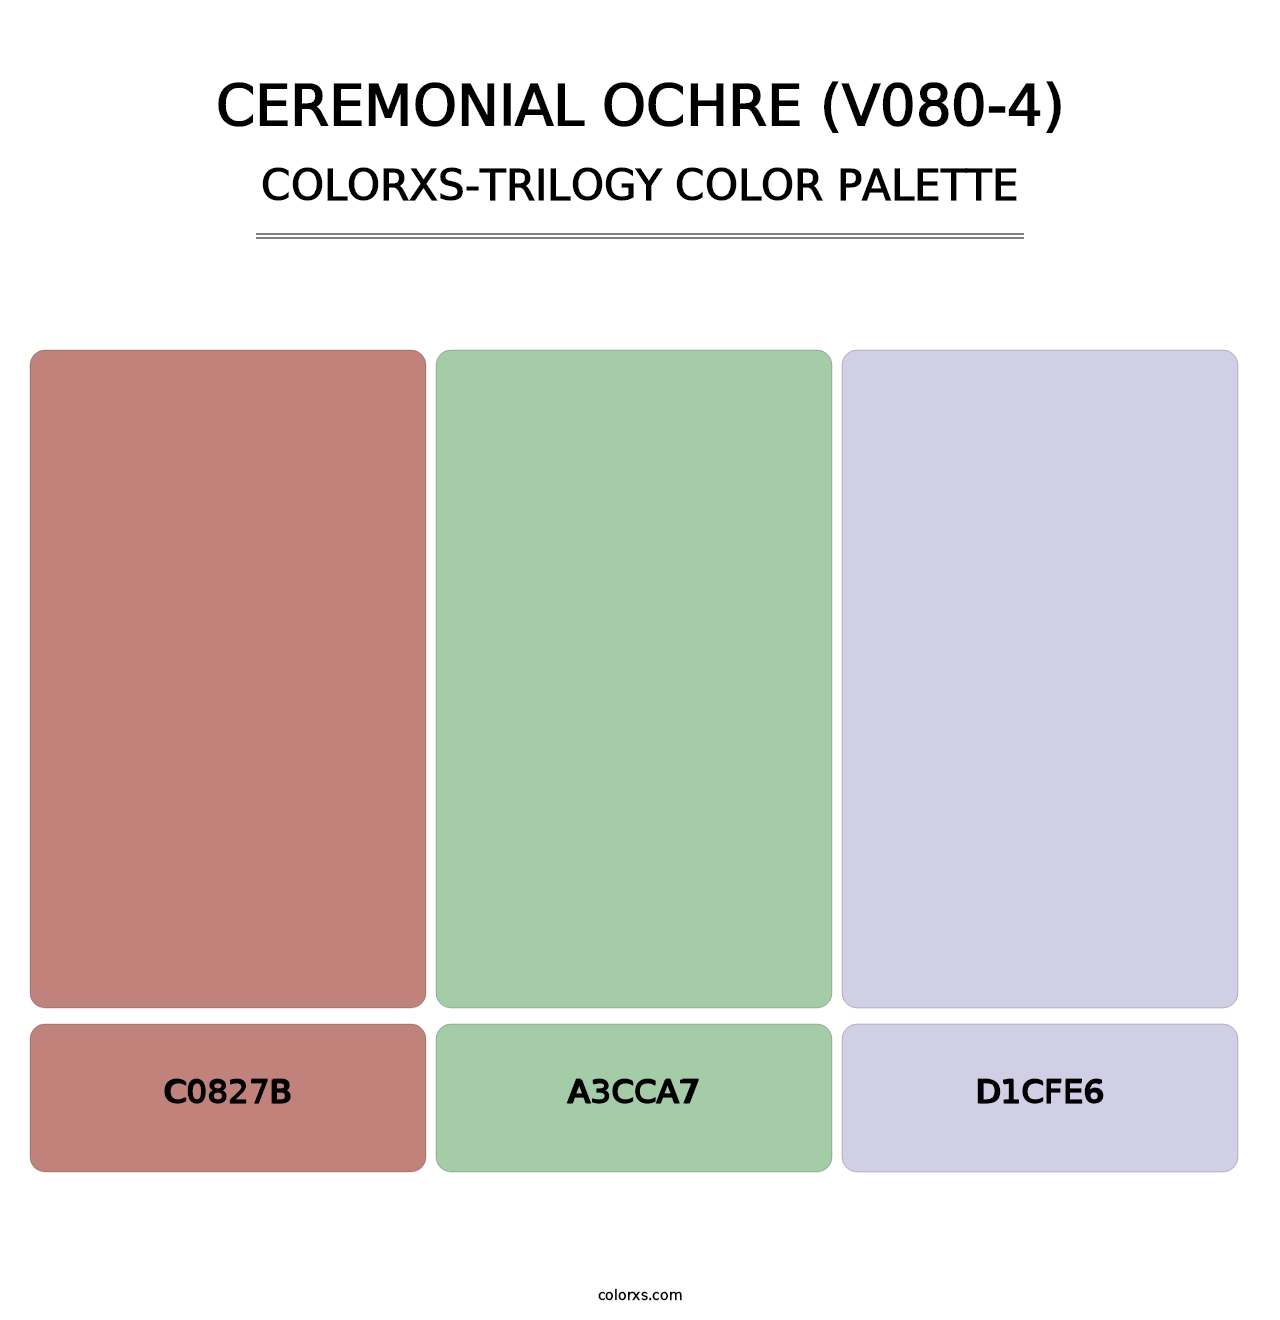 Ceremonial Ochre (V080-4) - Colorxs Trilogy Palette